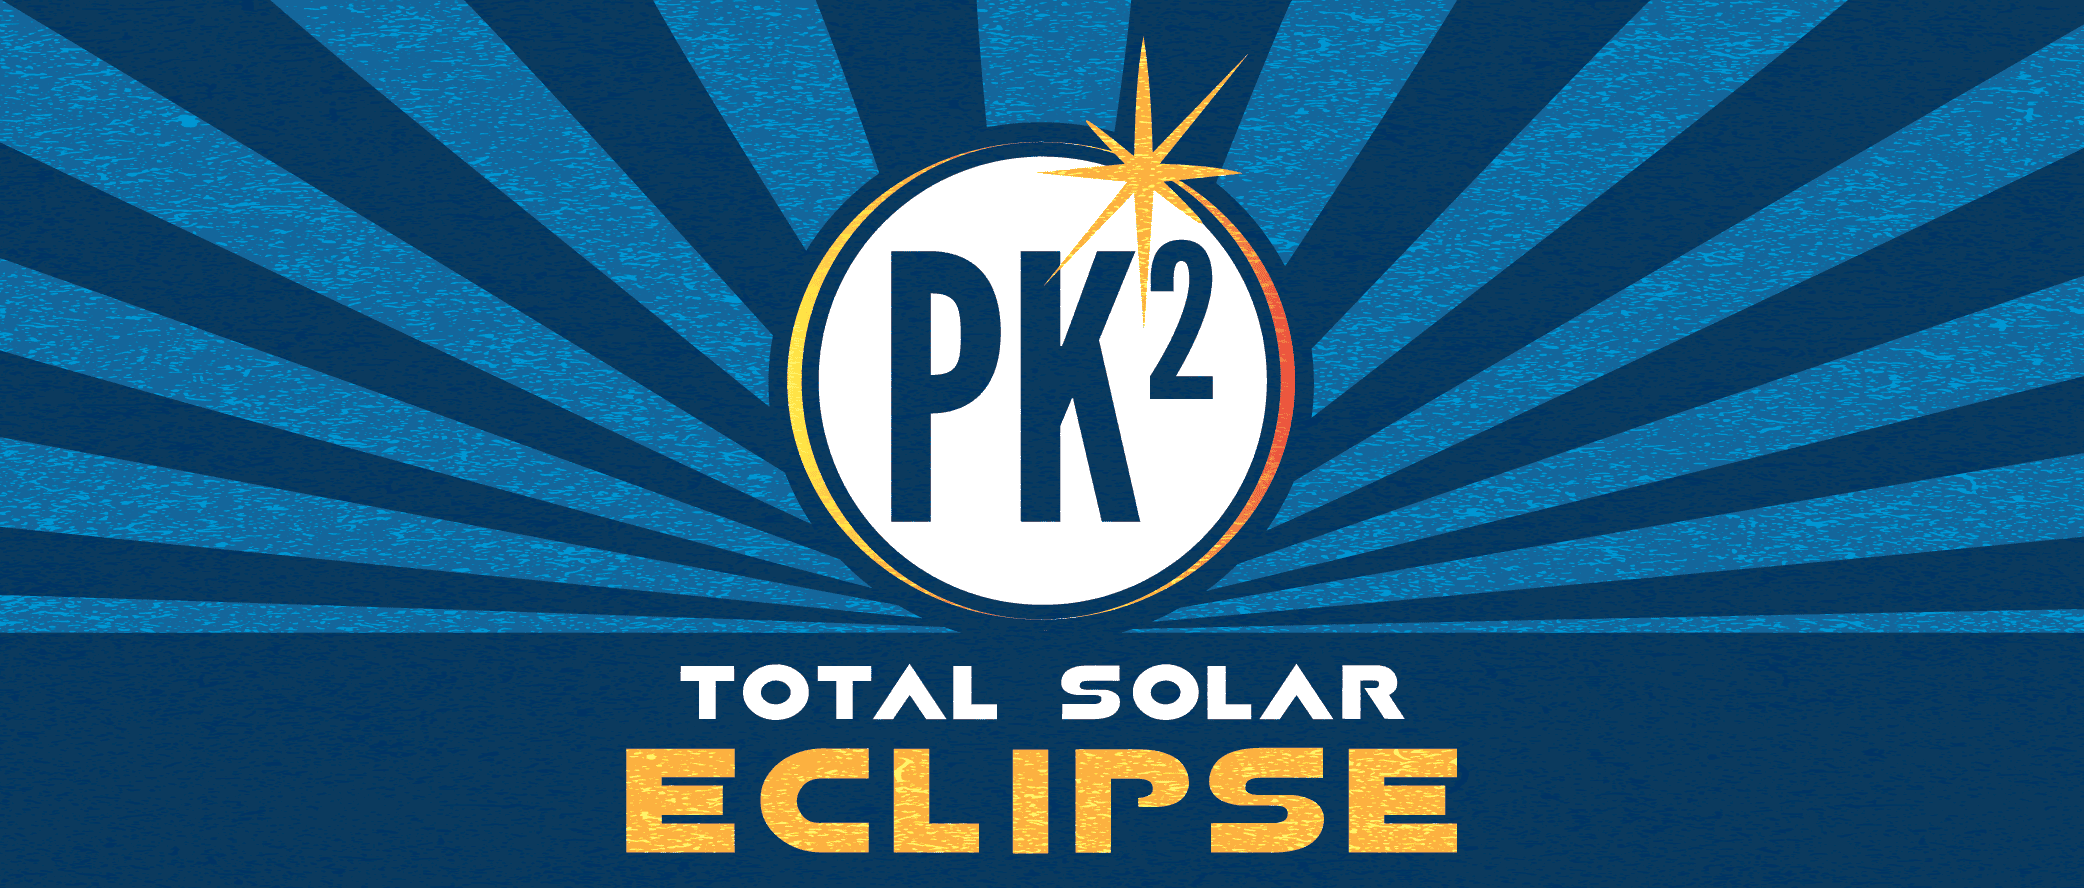 Total Solar Eclipse event logo